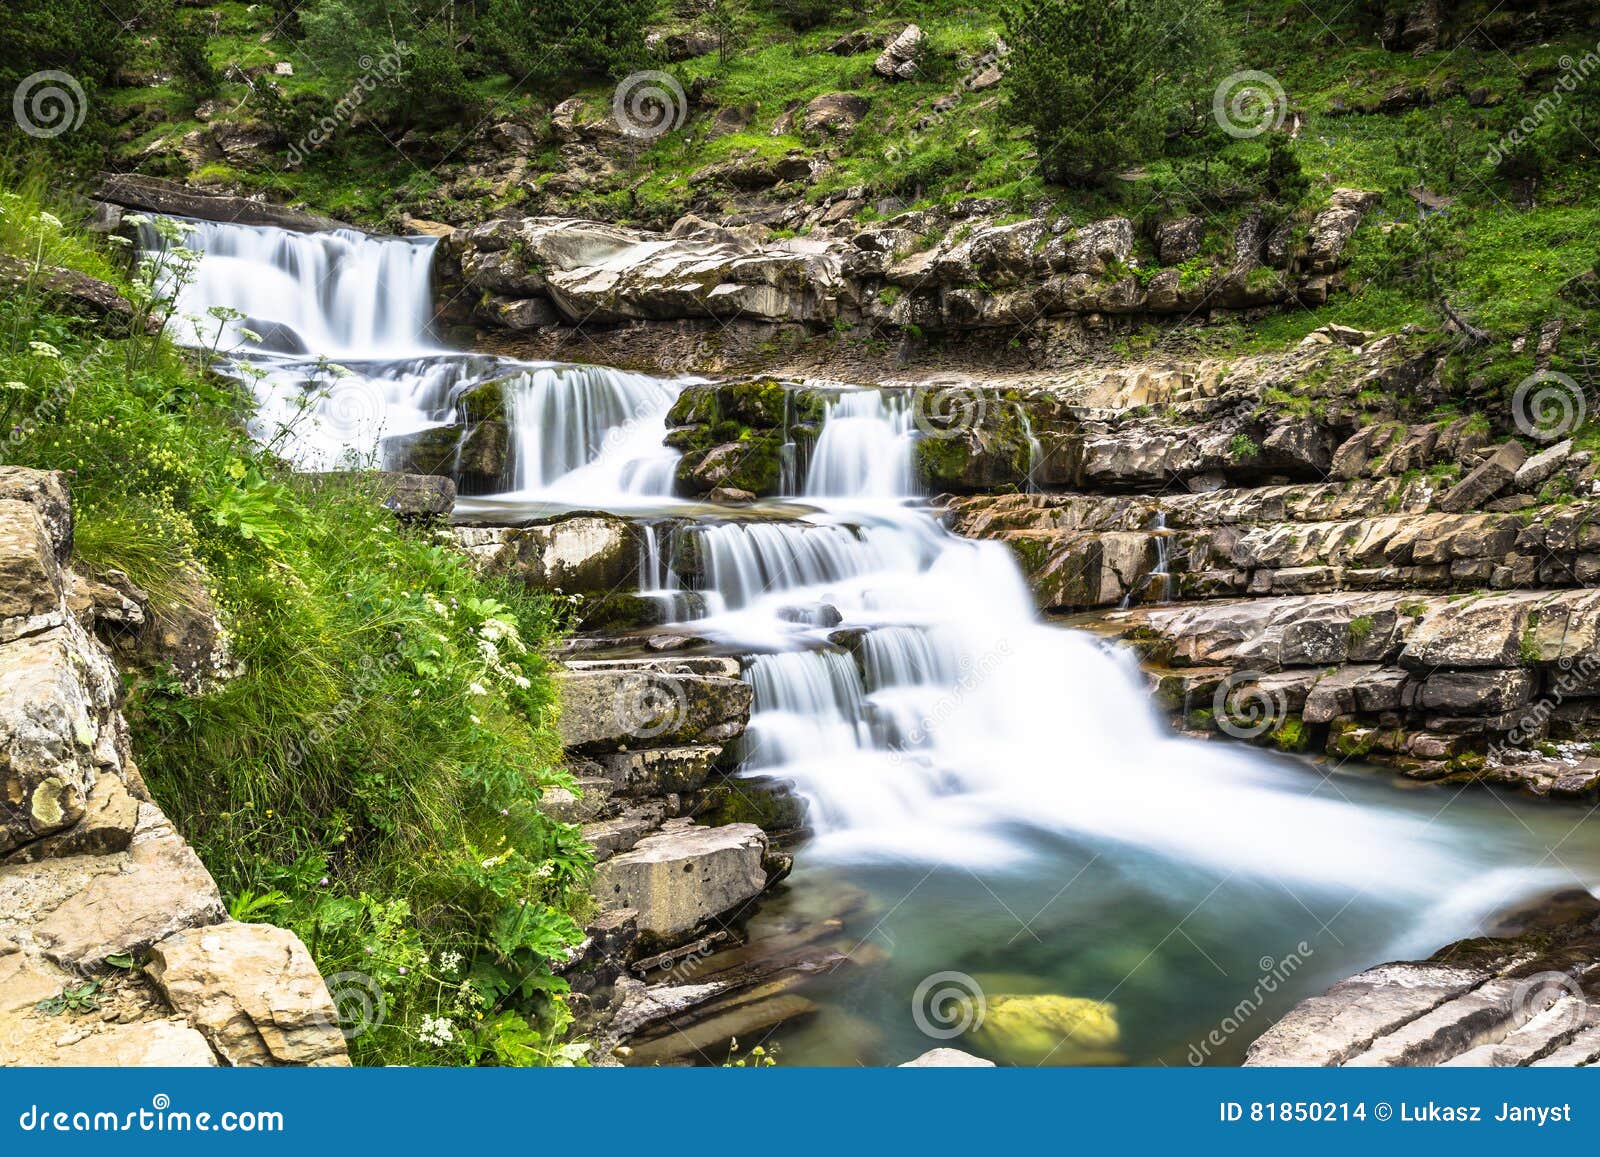 gradas de soaso. waterfall in the spanish national park ordesa a